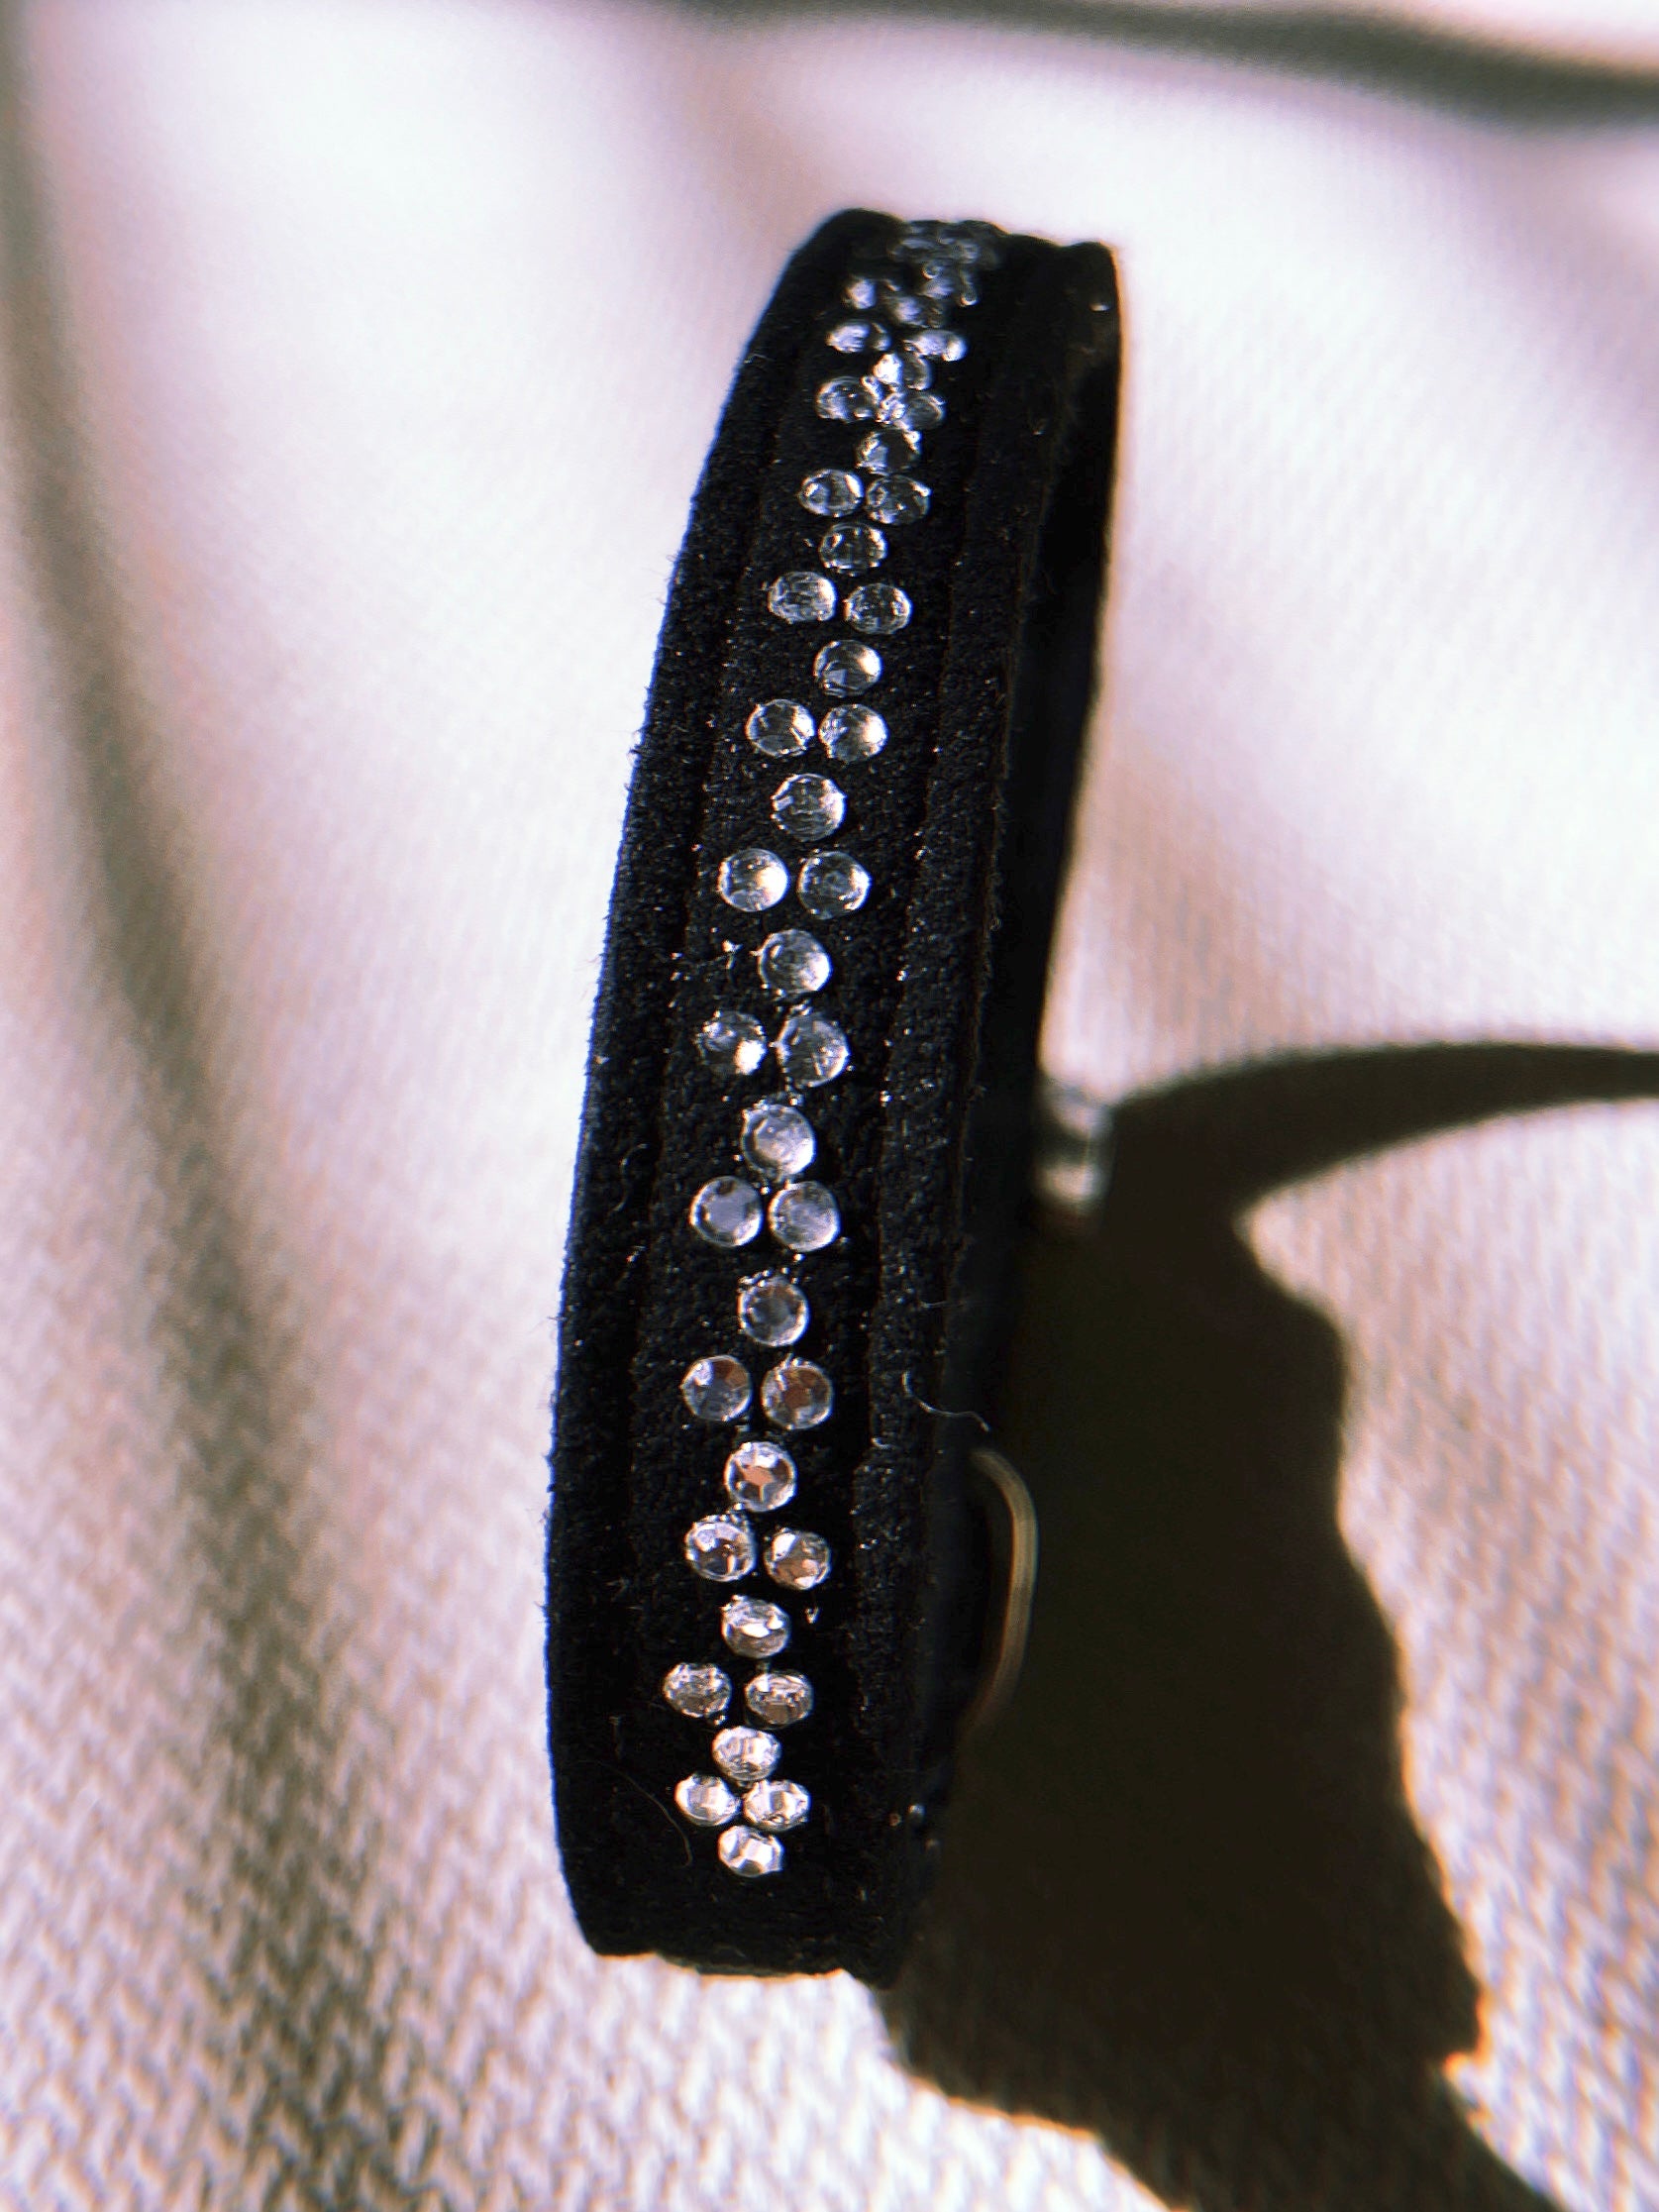 Vintage Black Fabric Tiny Pet Collar w. White Rhinestone Applique